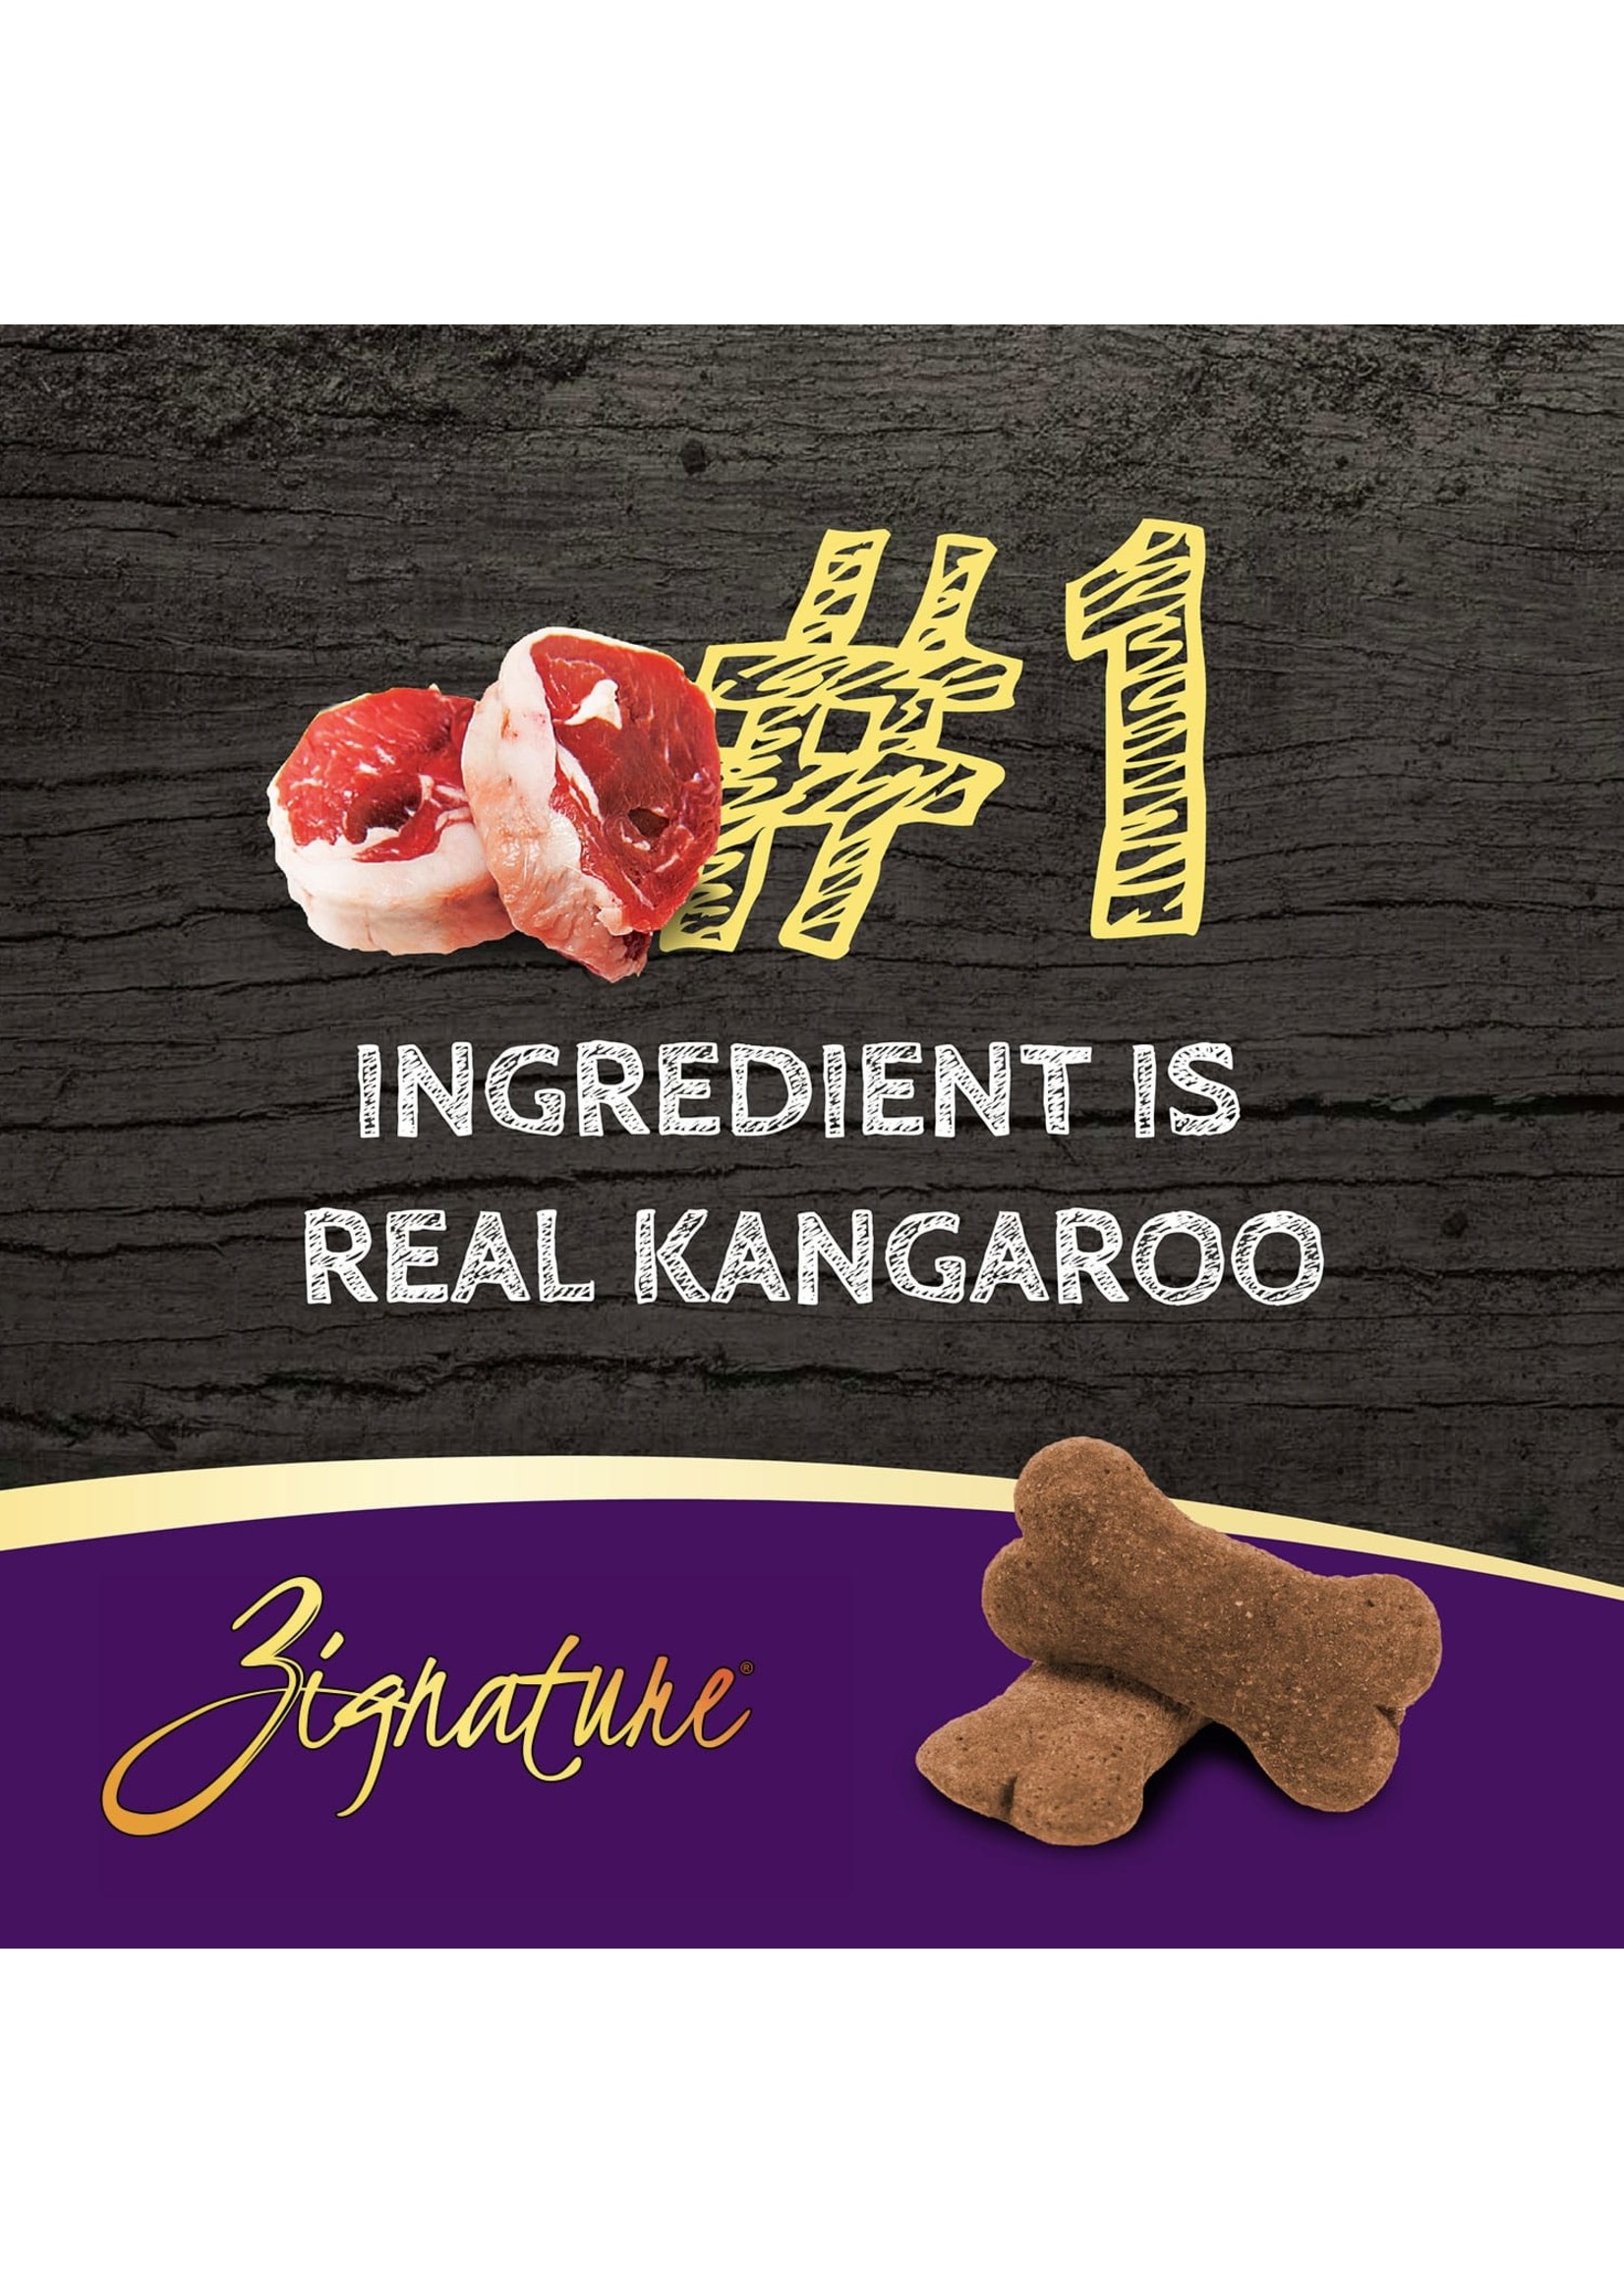 Zignature Zignature Kangaroo Formula Ziggy Bar Biscuit Treats for Dogs  12oz